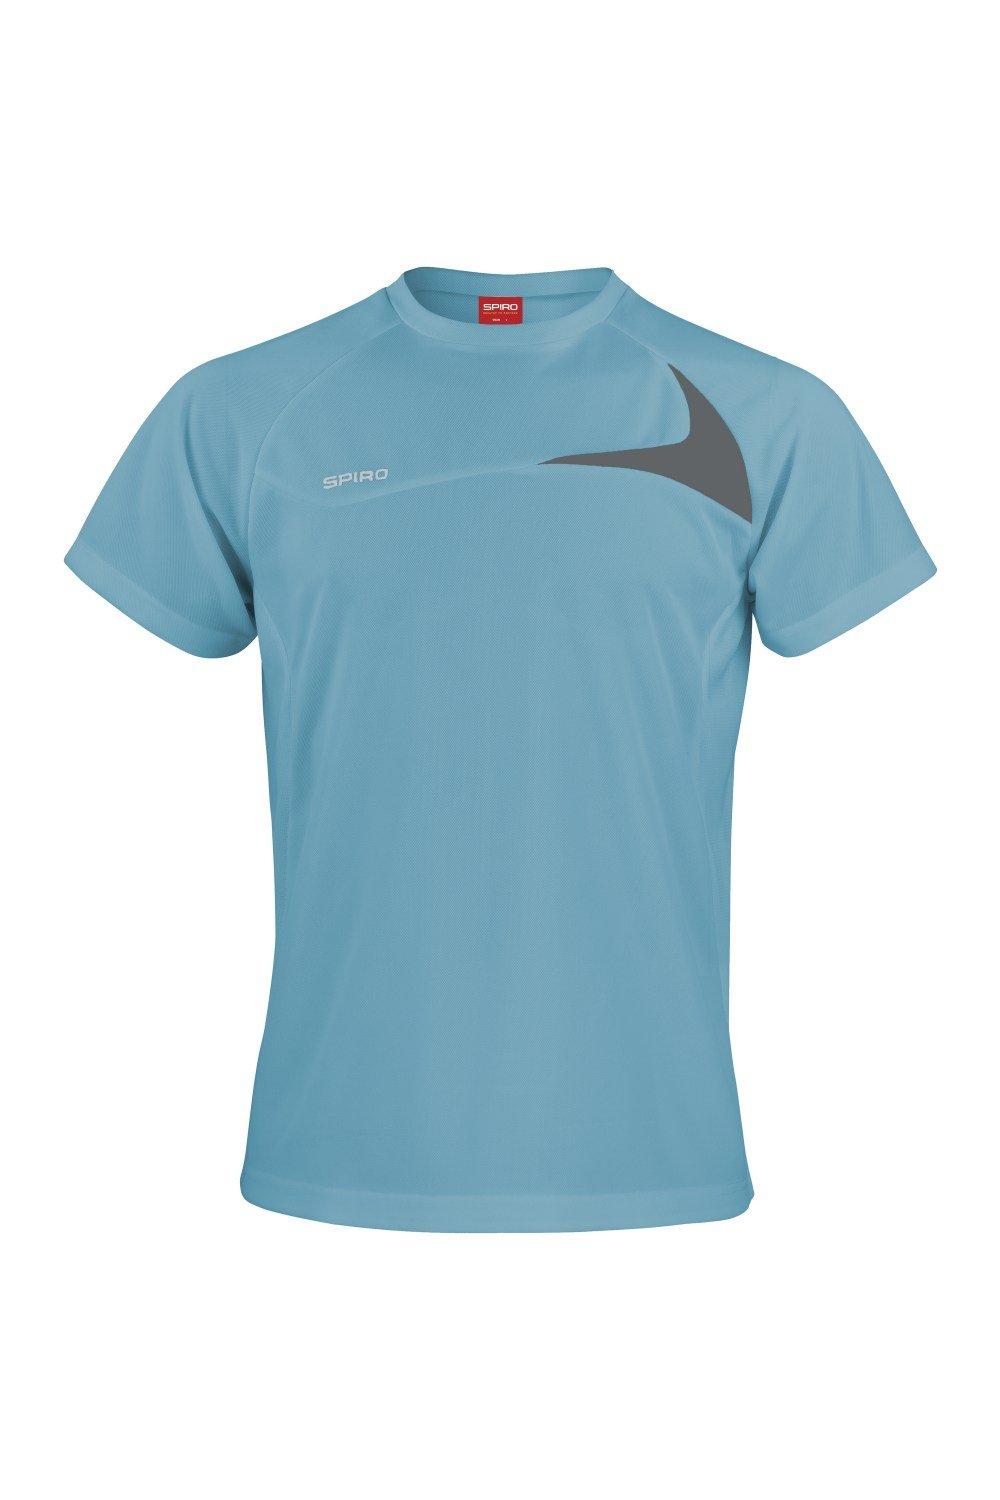 Спортивная рубашка Dash Performance для тренировок Spiro, синий